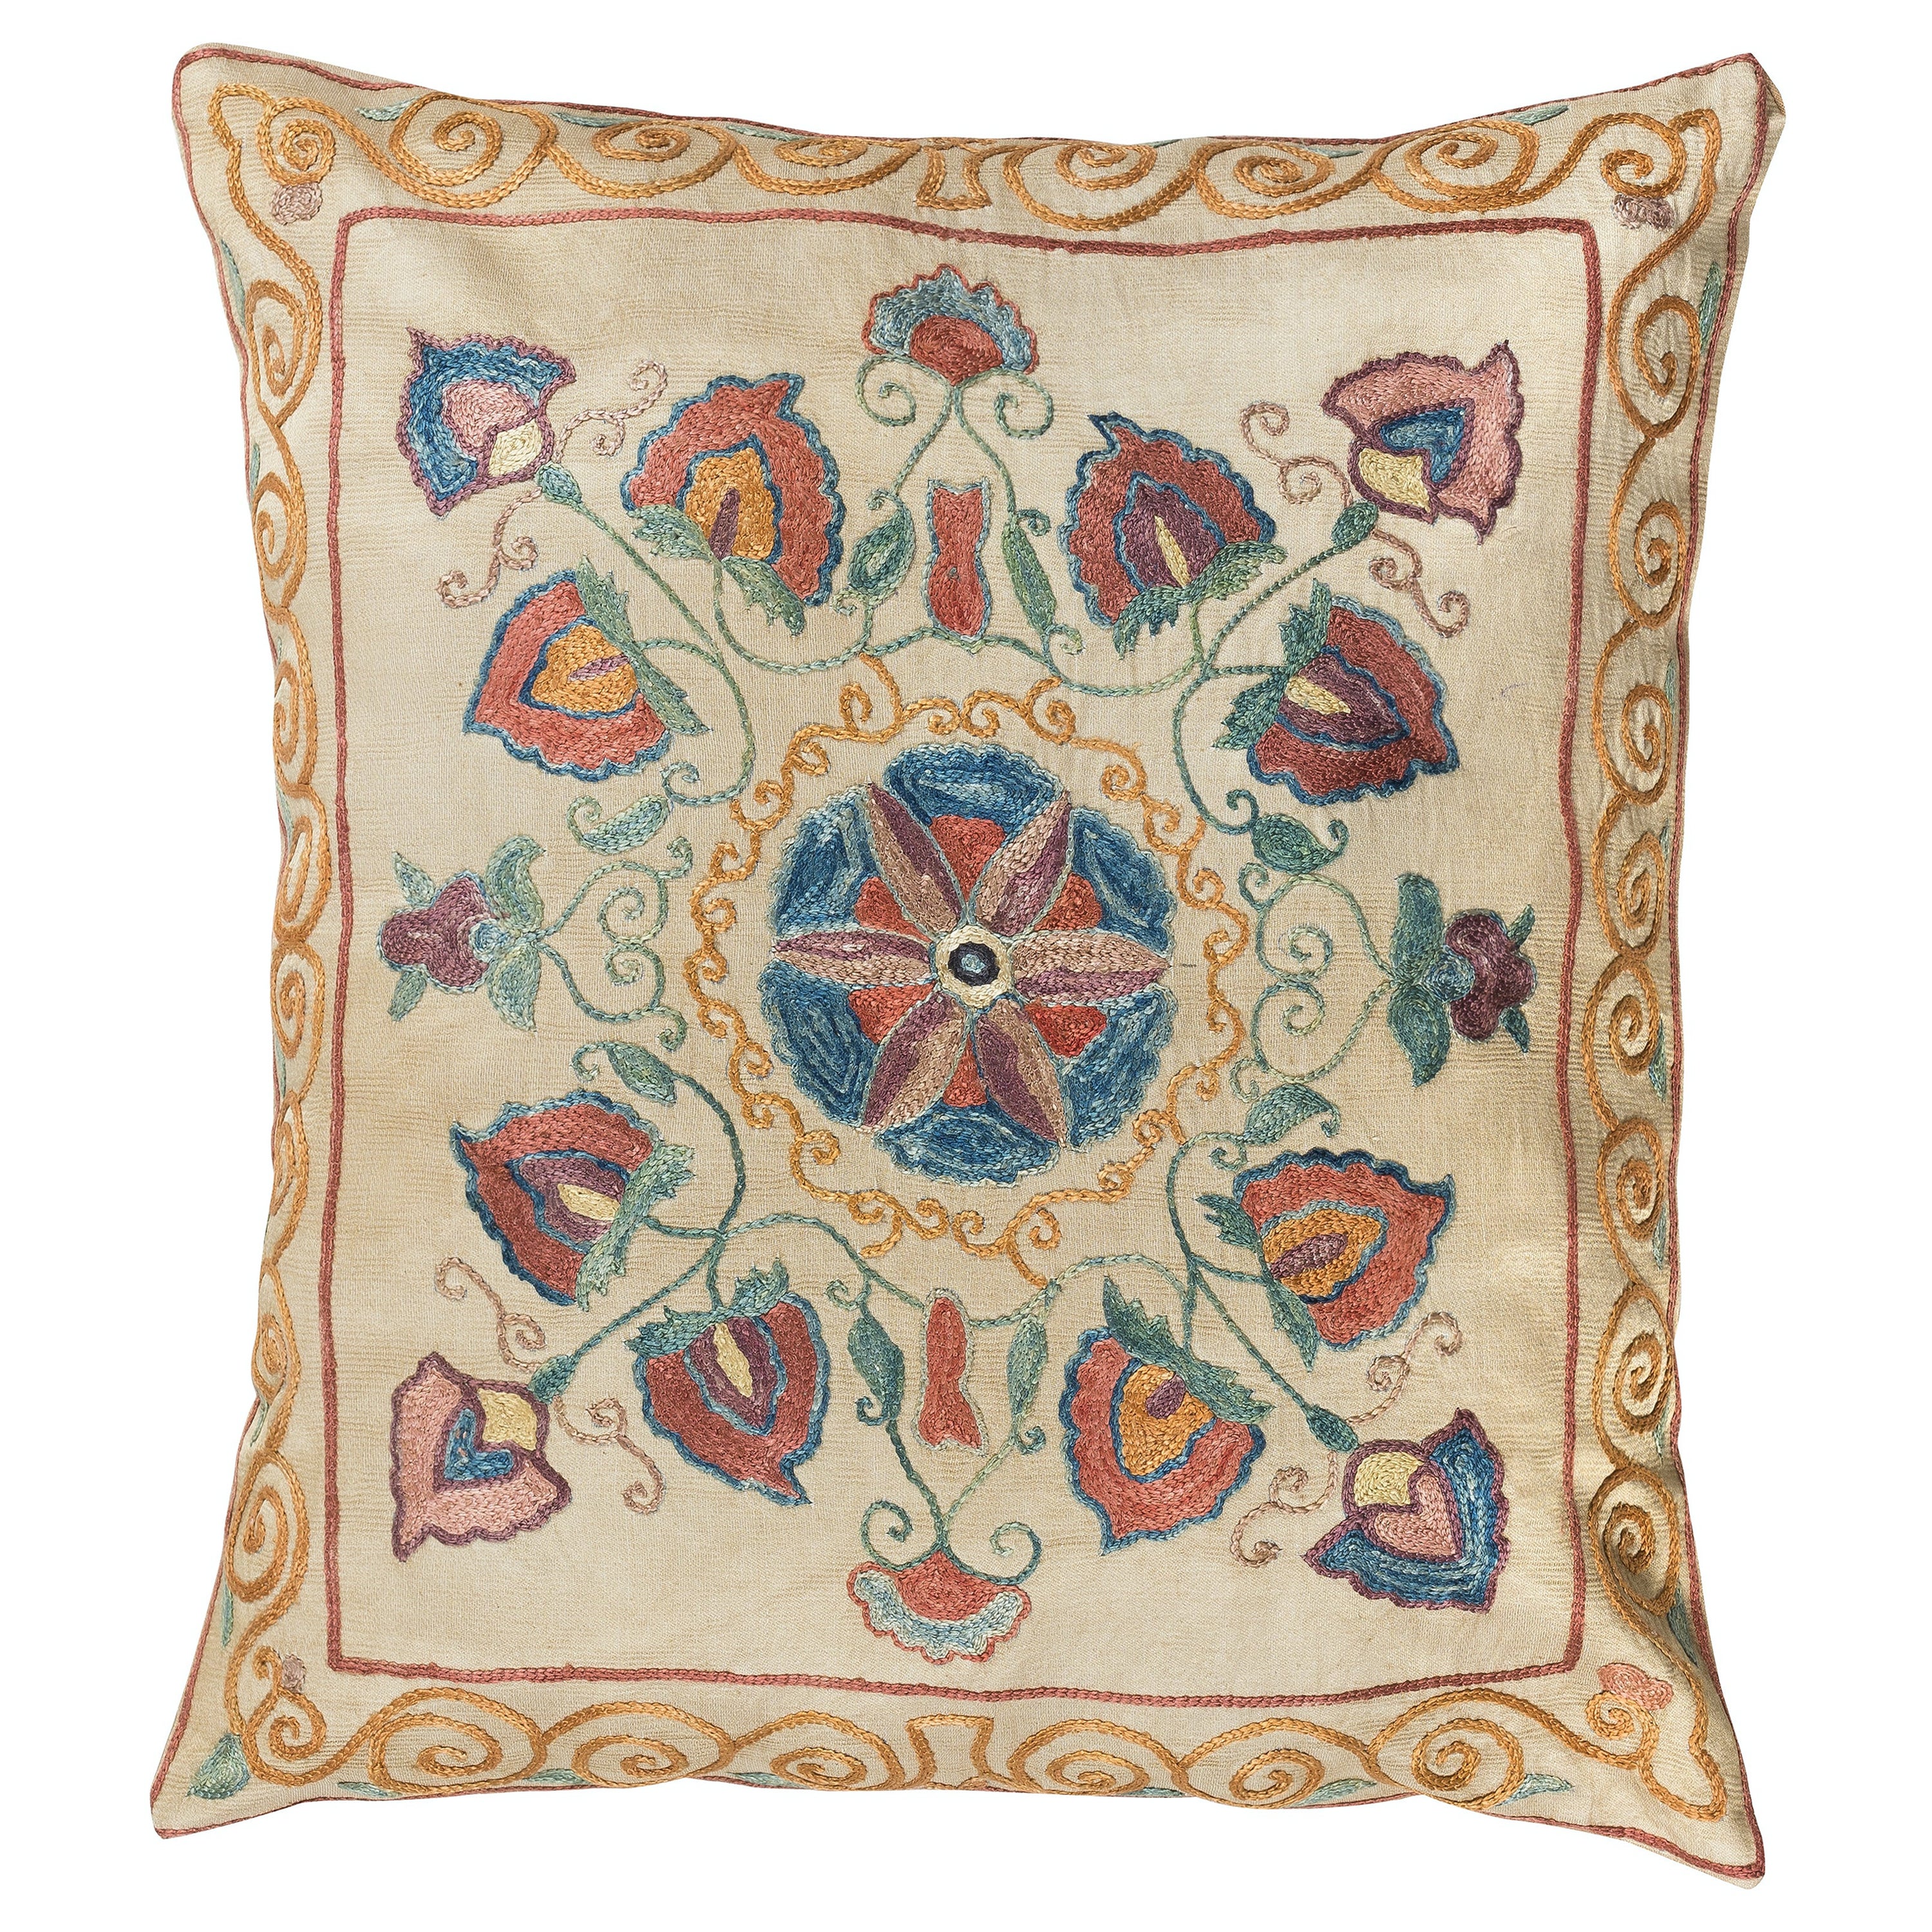 Uzbek Suzani Fabric Cushion Cover. All Silk. Hand Embroidered Pillowcase 19"x21"